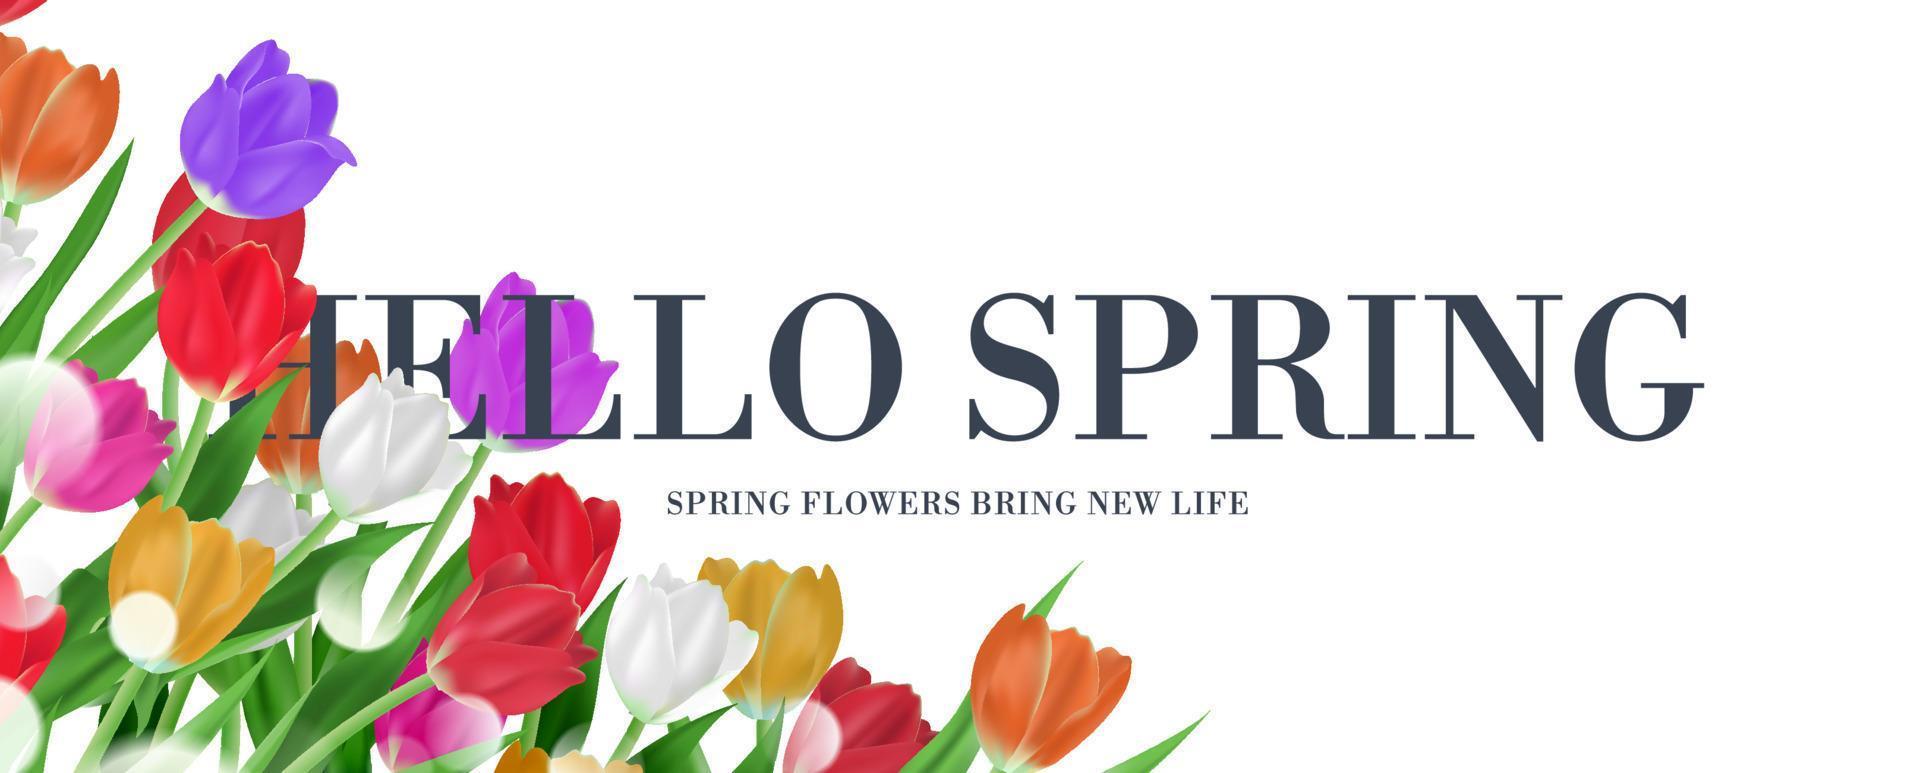 elegante hola primavera texto marco floral banner, coloridos tulipanes ramo fondo vector ilustración